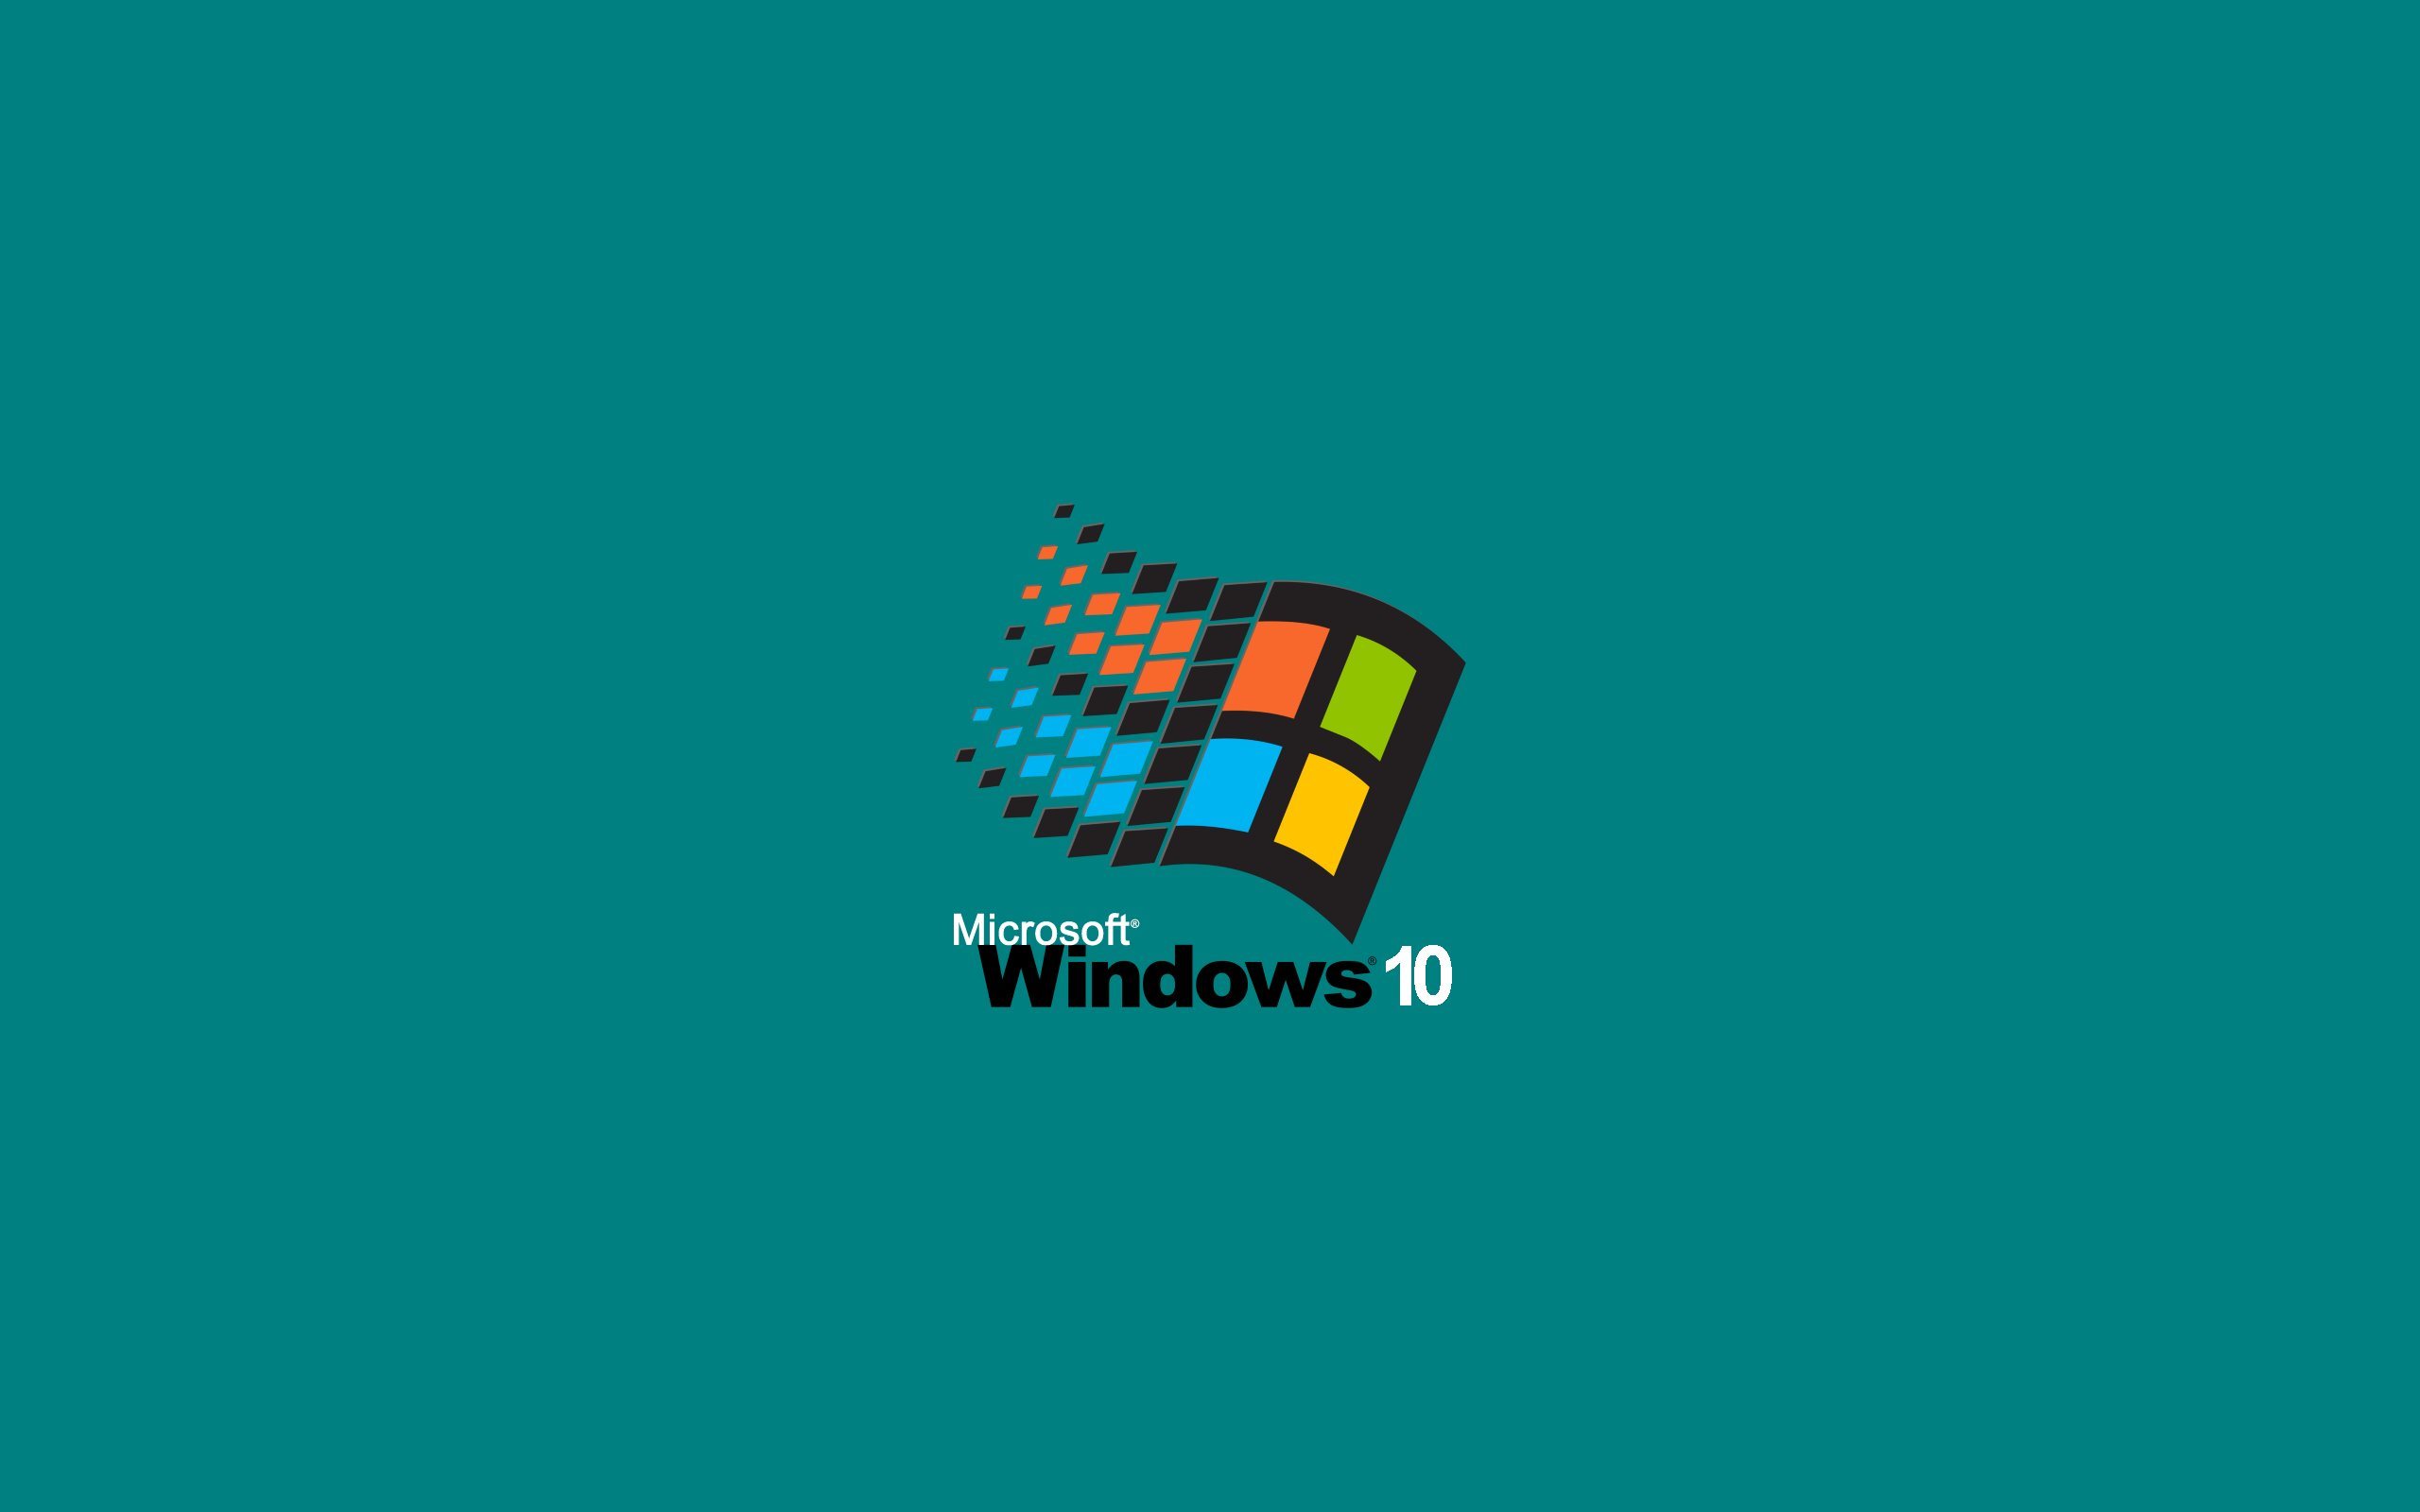 windows-10-logo-blue-background-windows-95-style_2560x1600.jpg